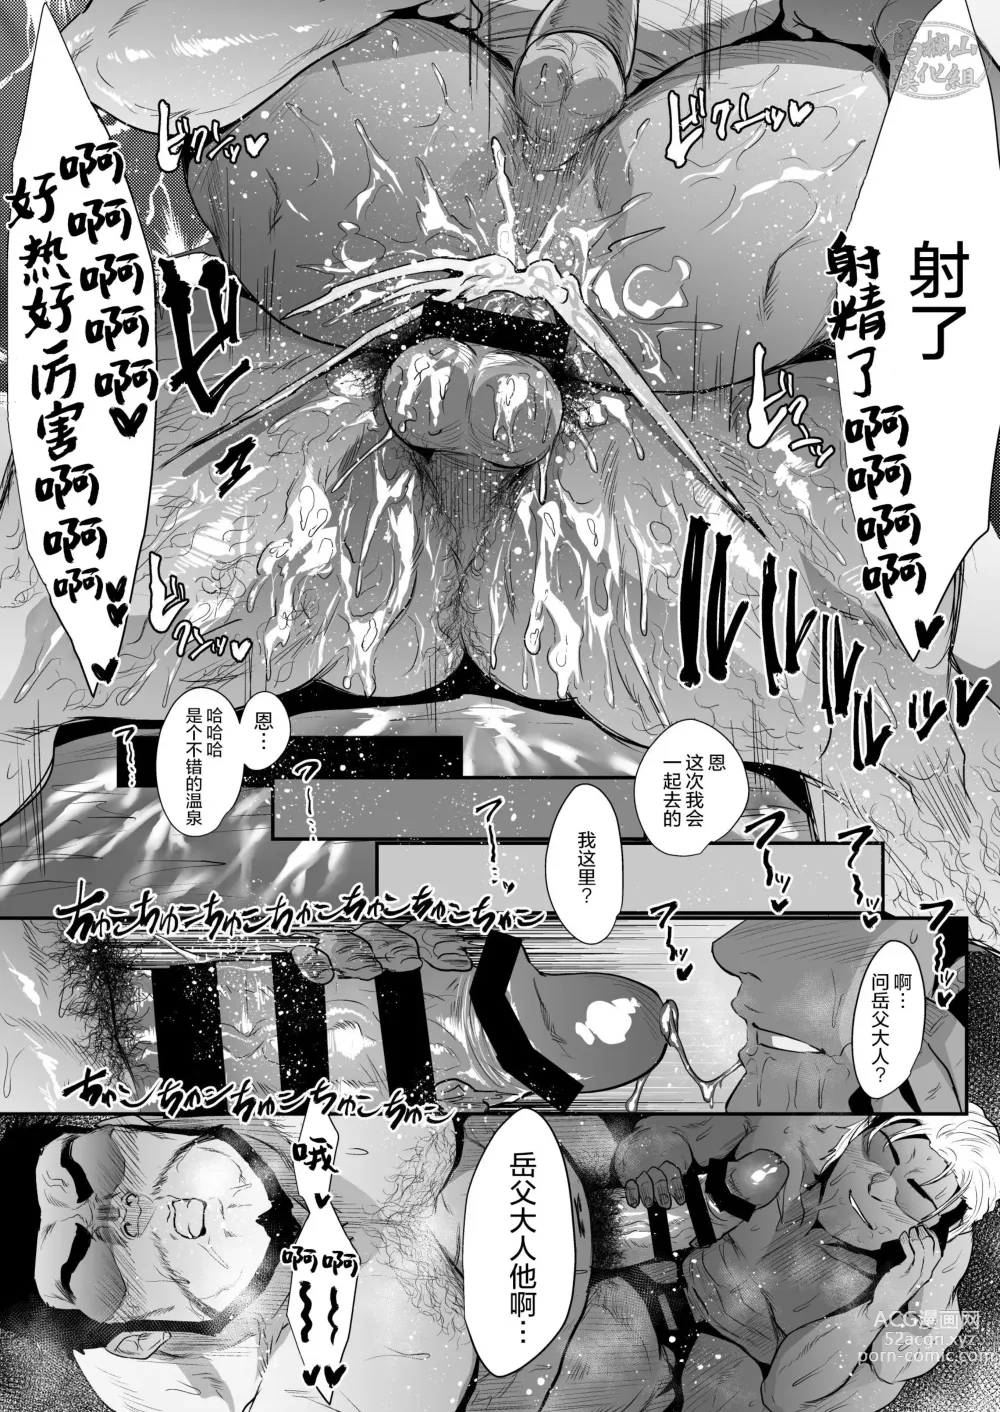 Page 59 of manga Fanclub